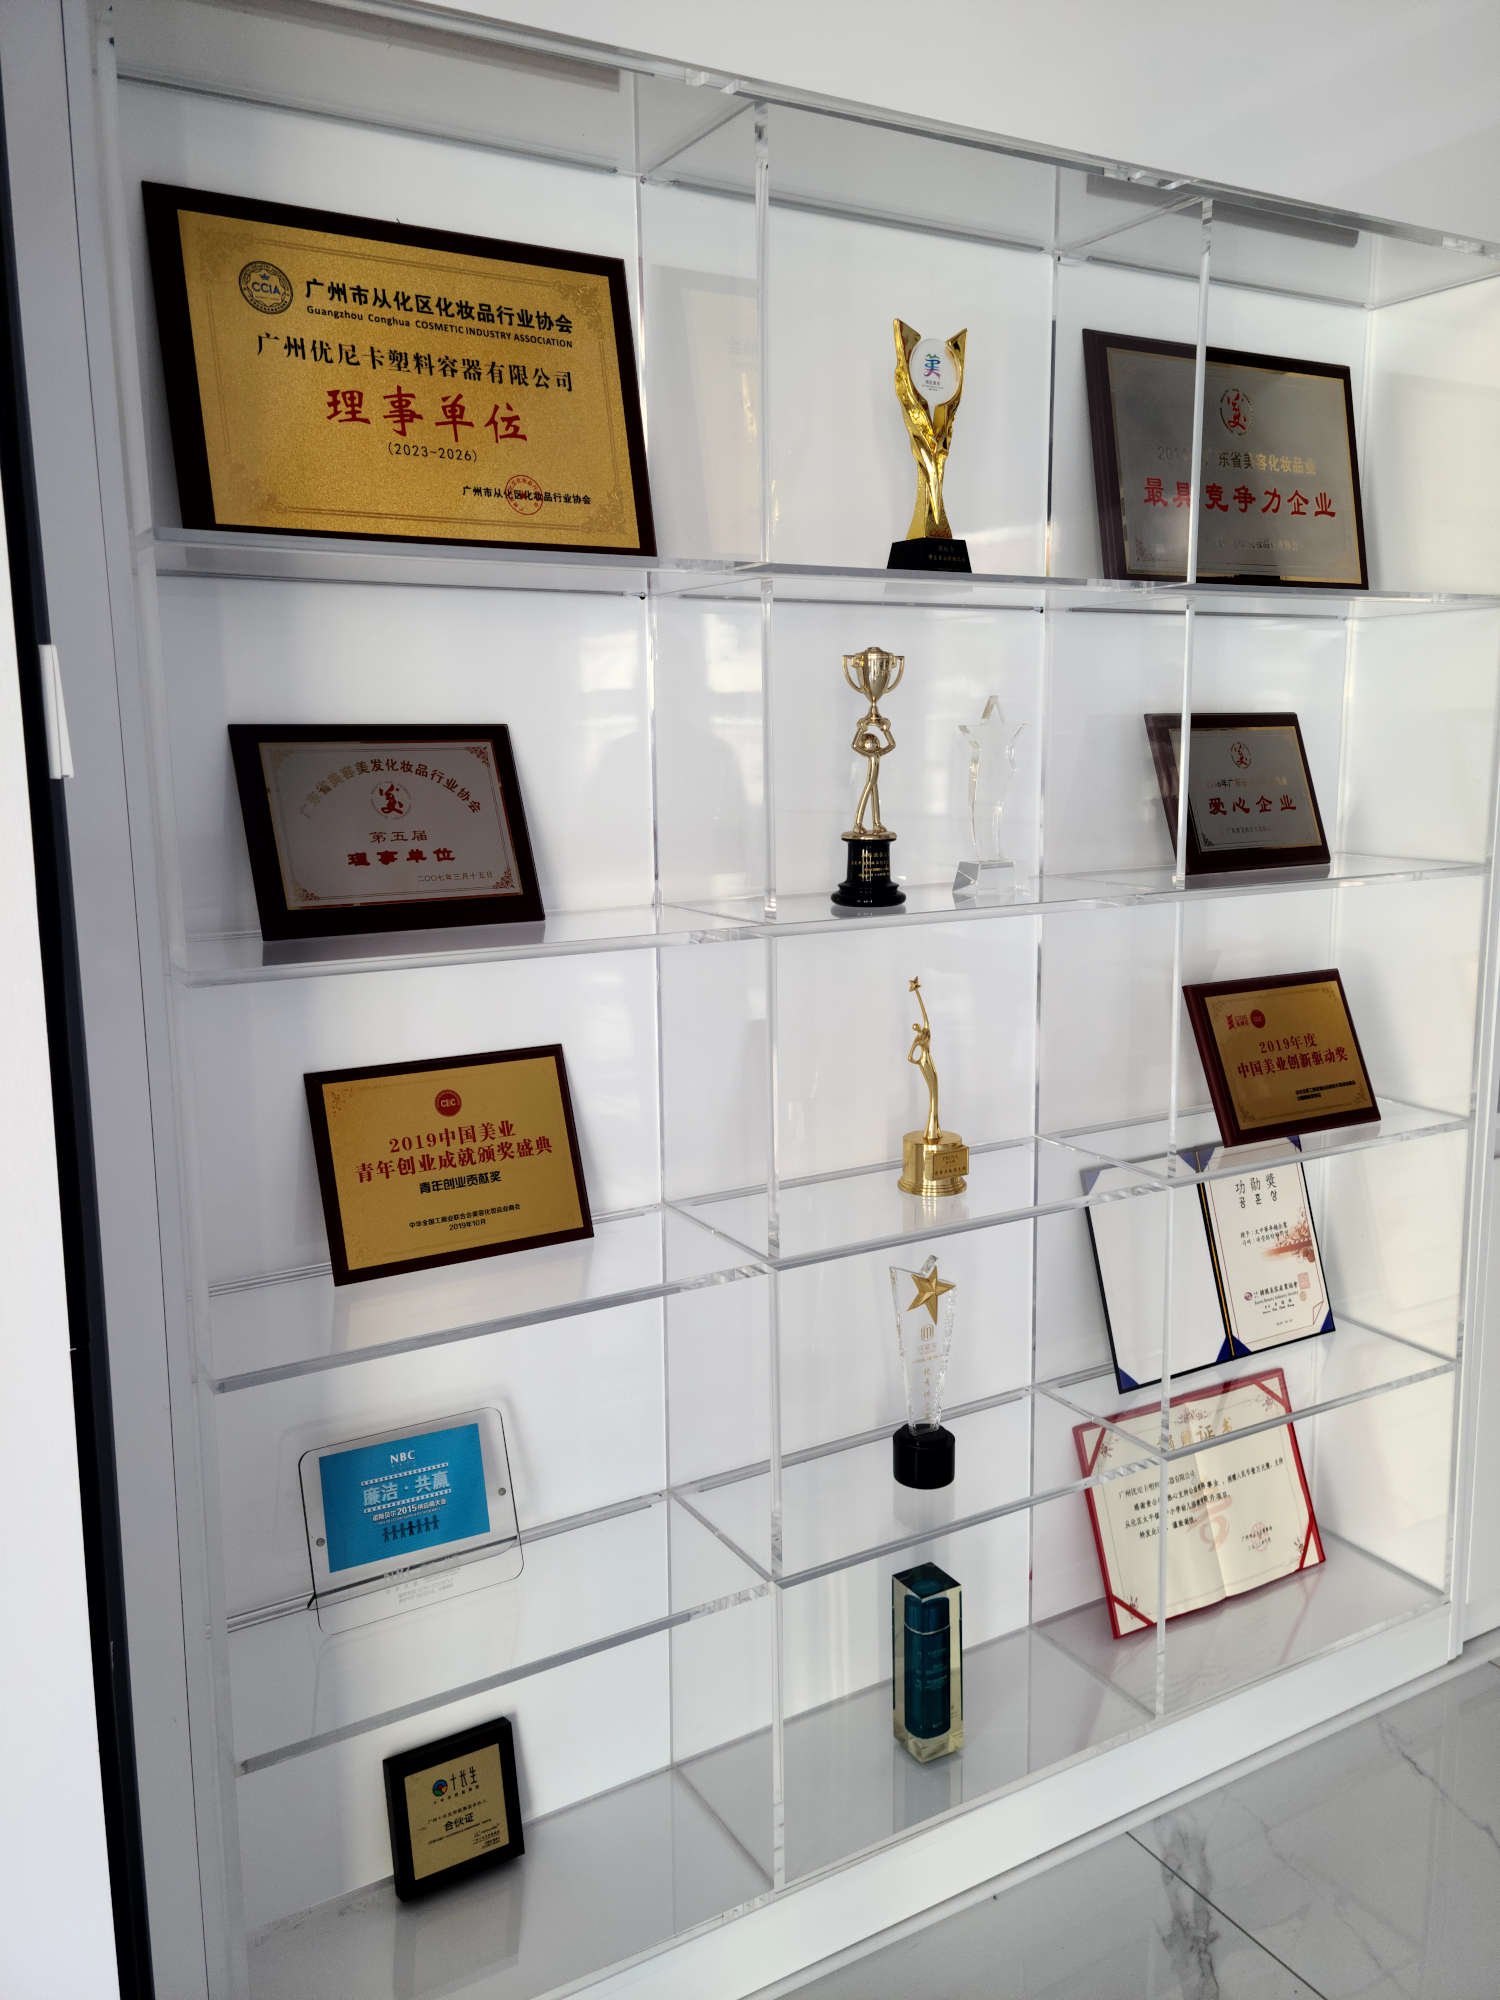 Unica Packaging's award shelf